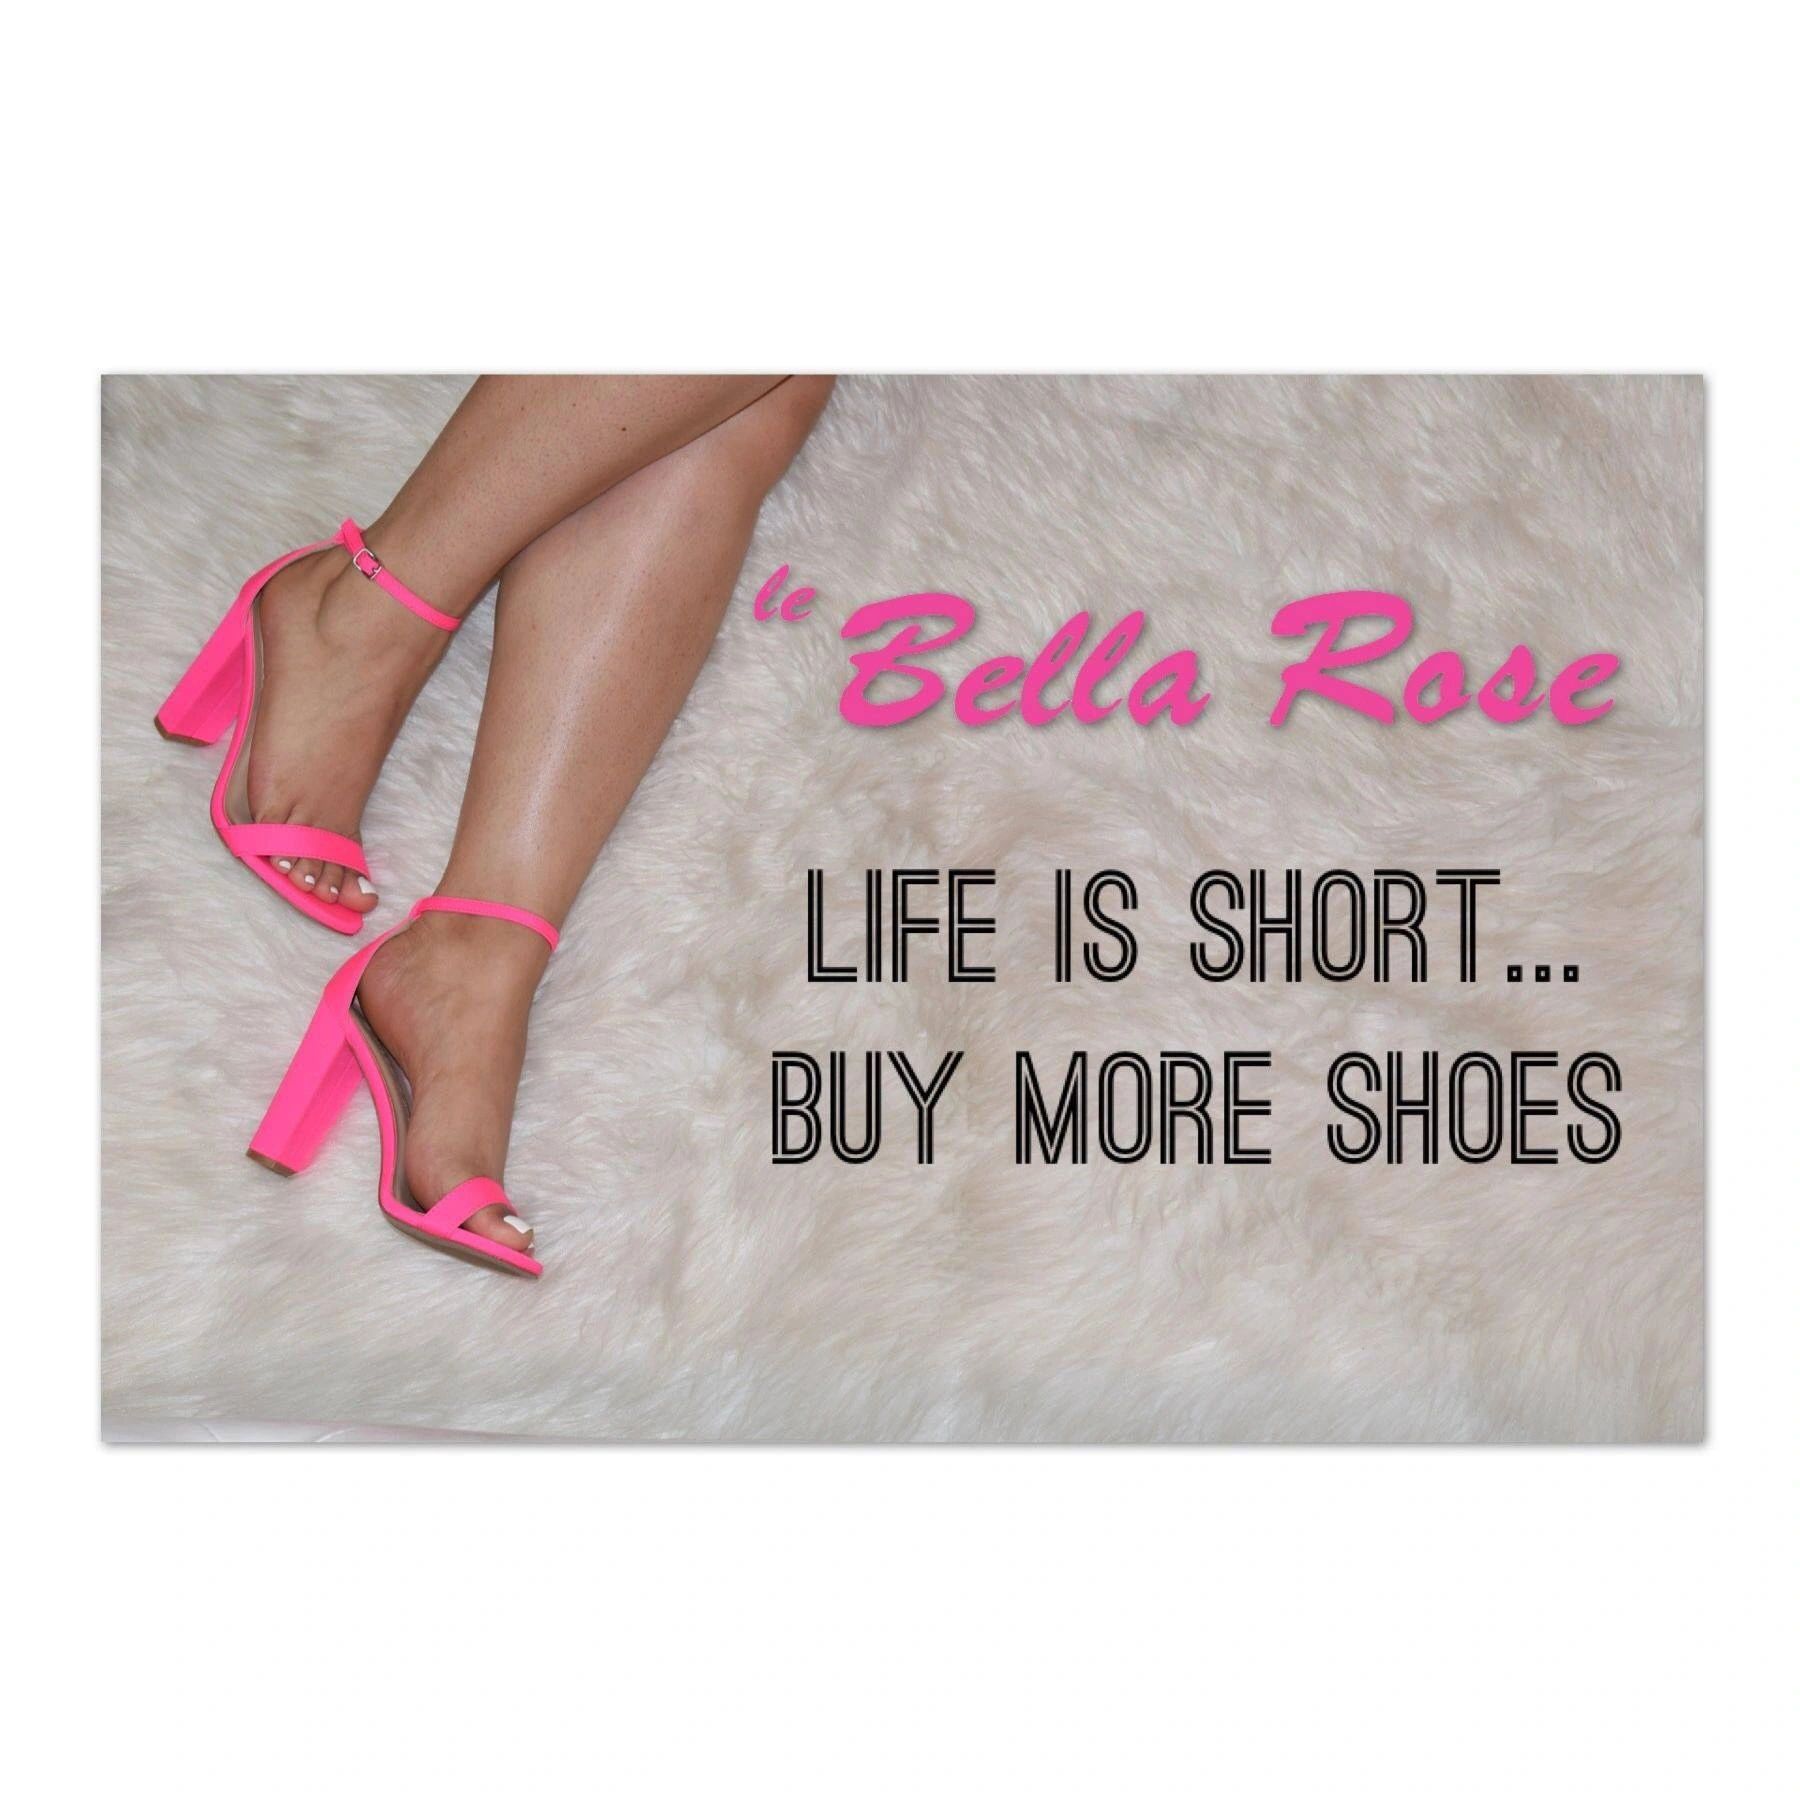 Le Bella Rose - Shoes for Women, Shoe Stores, Womens Sandals